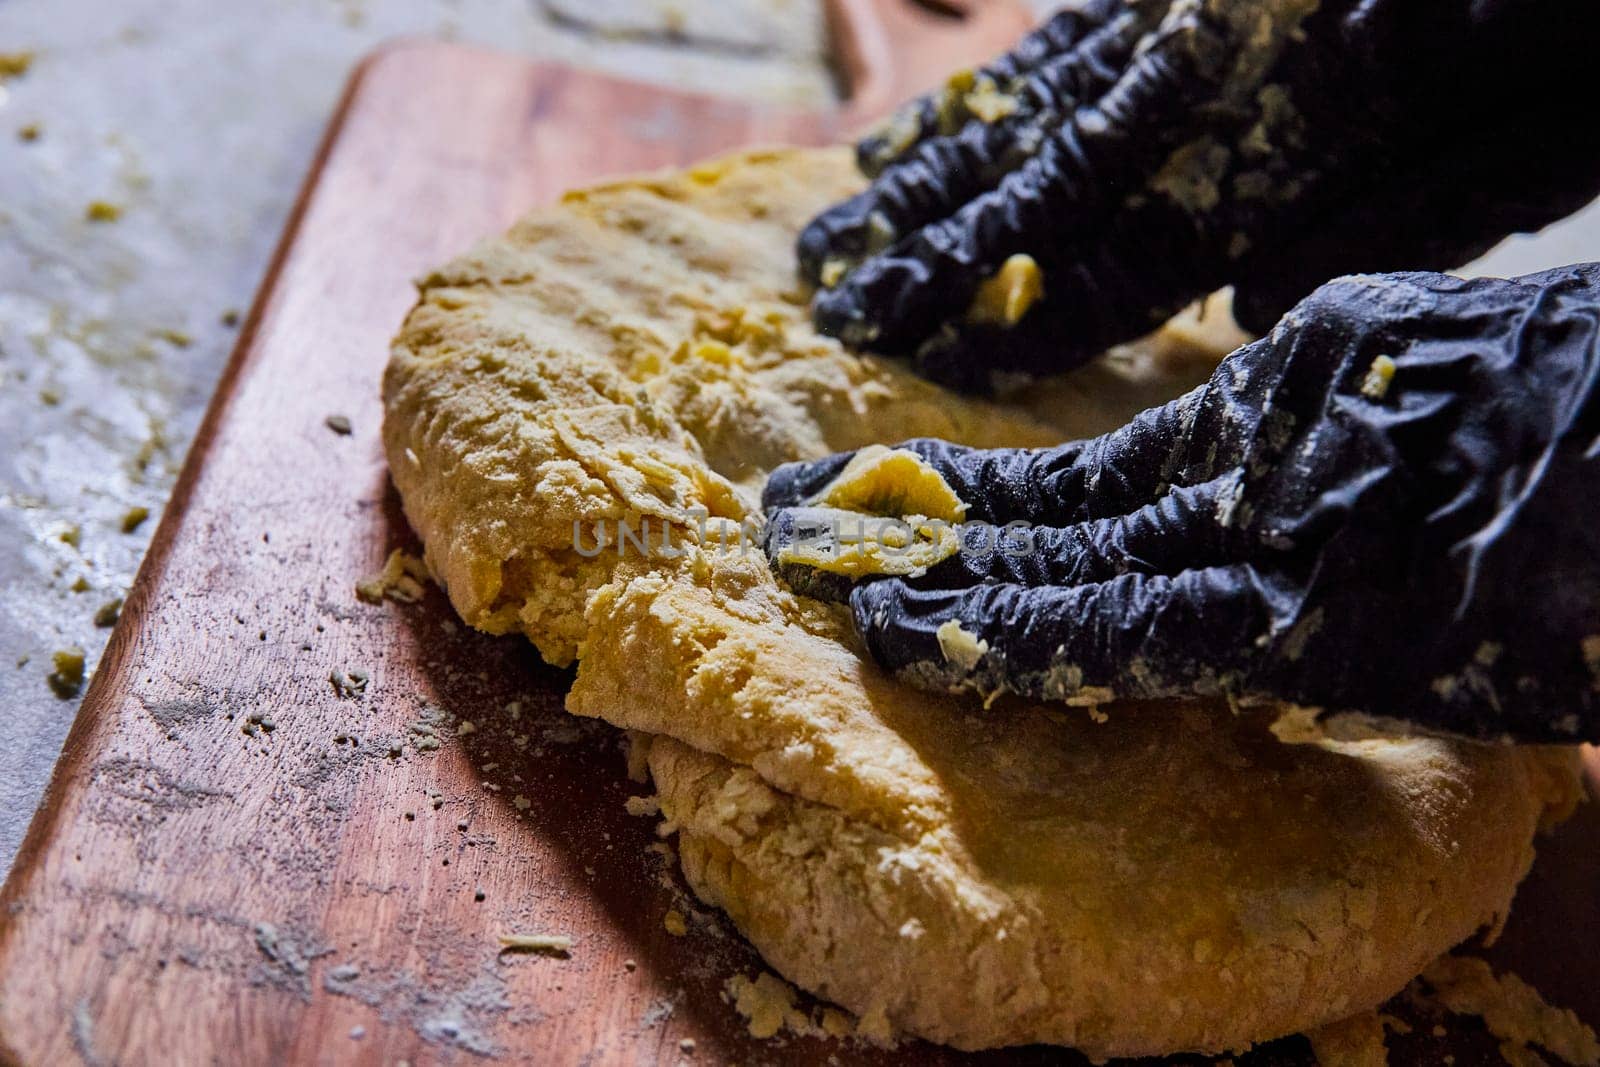 Gloved hands gently break apart a golden homemade rustic bread loaf, Fort Wayne, Indiana's bakery scene